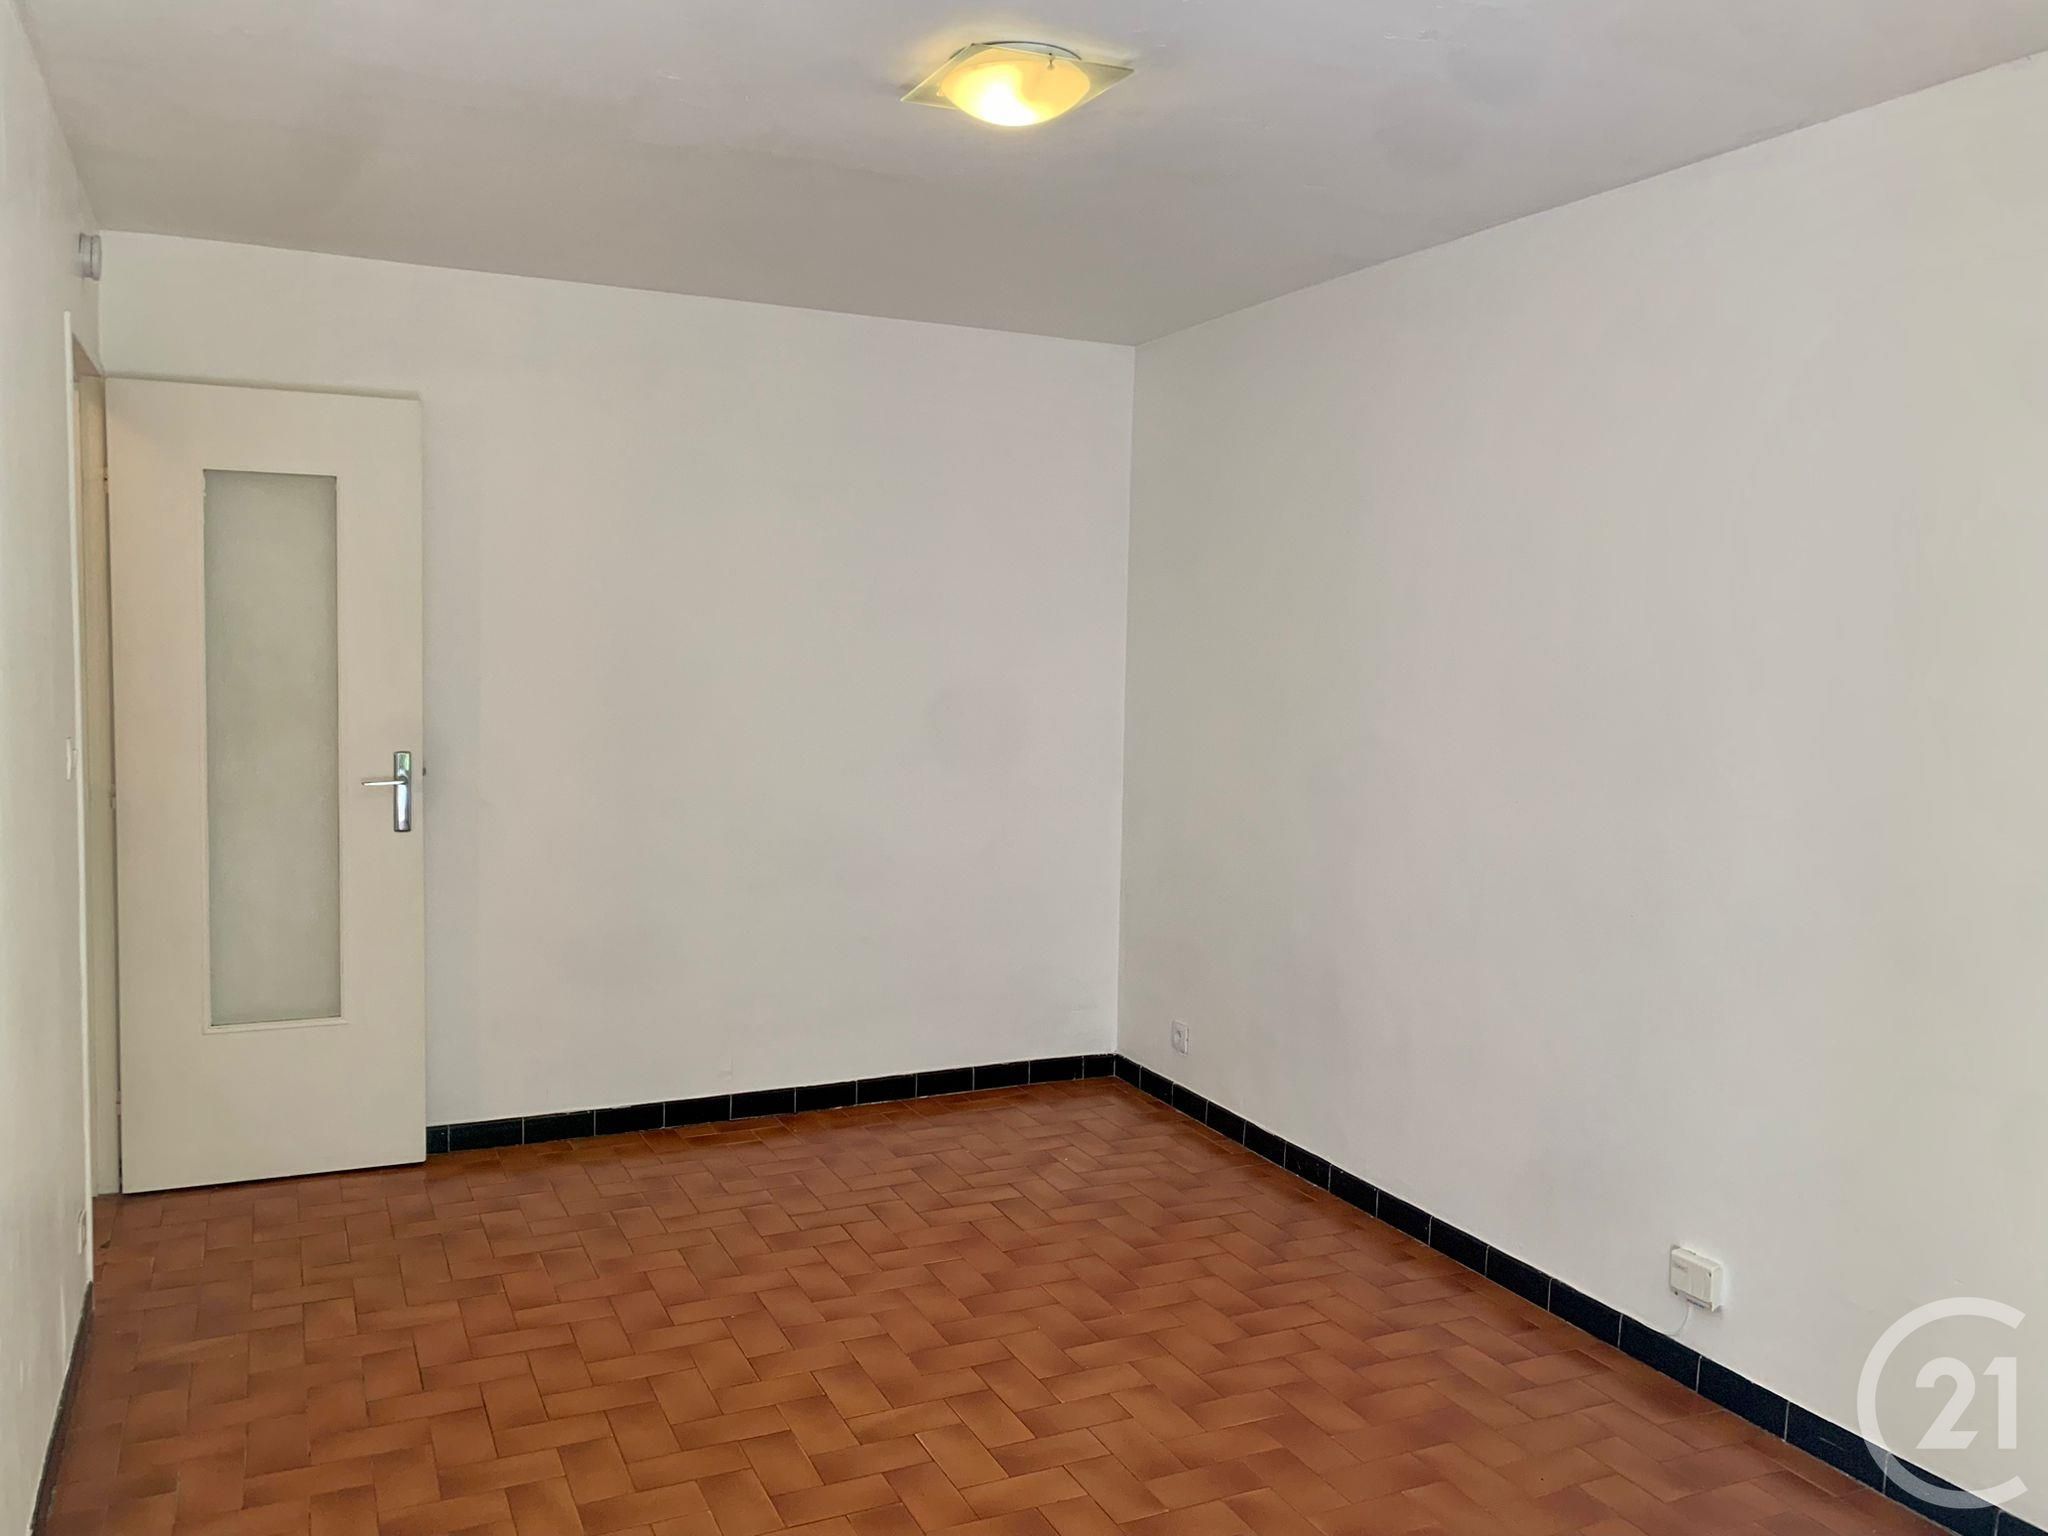 Appartement 1 pièce - 19m² - MONTPELLIER